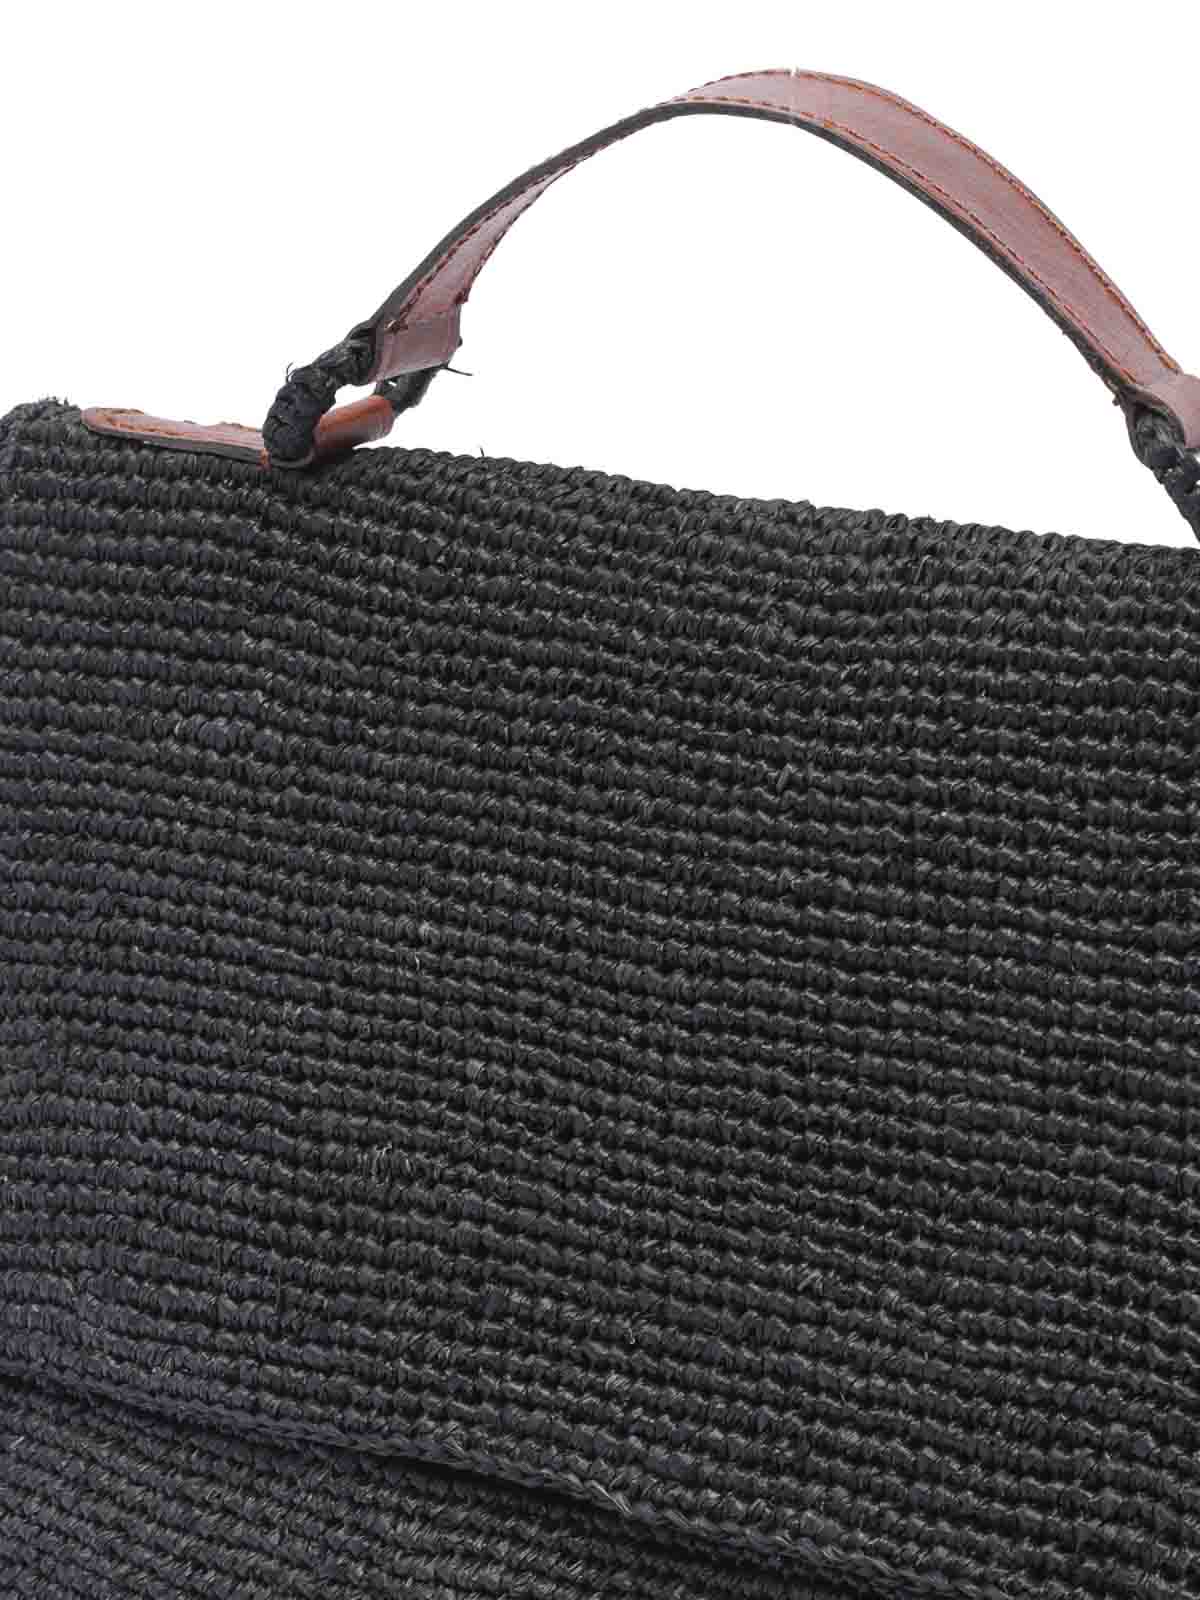 Shop Ibeliv Black Lahady Handbag With Magnetic Closure